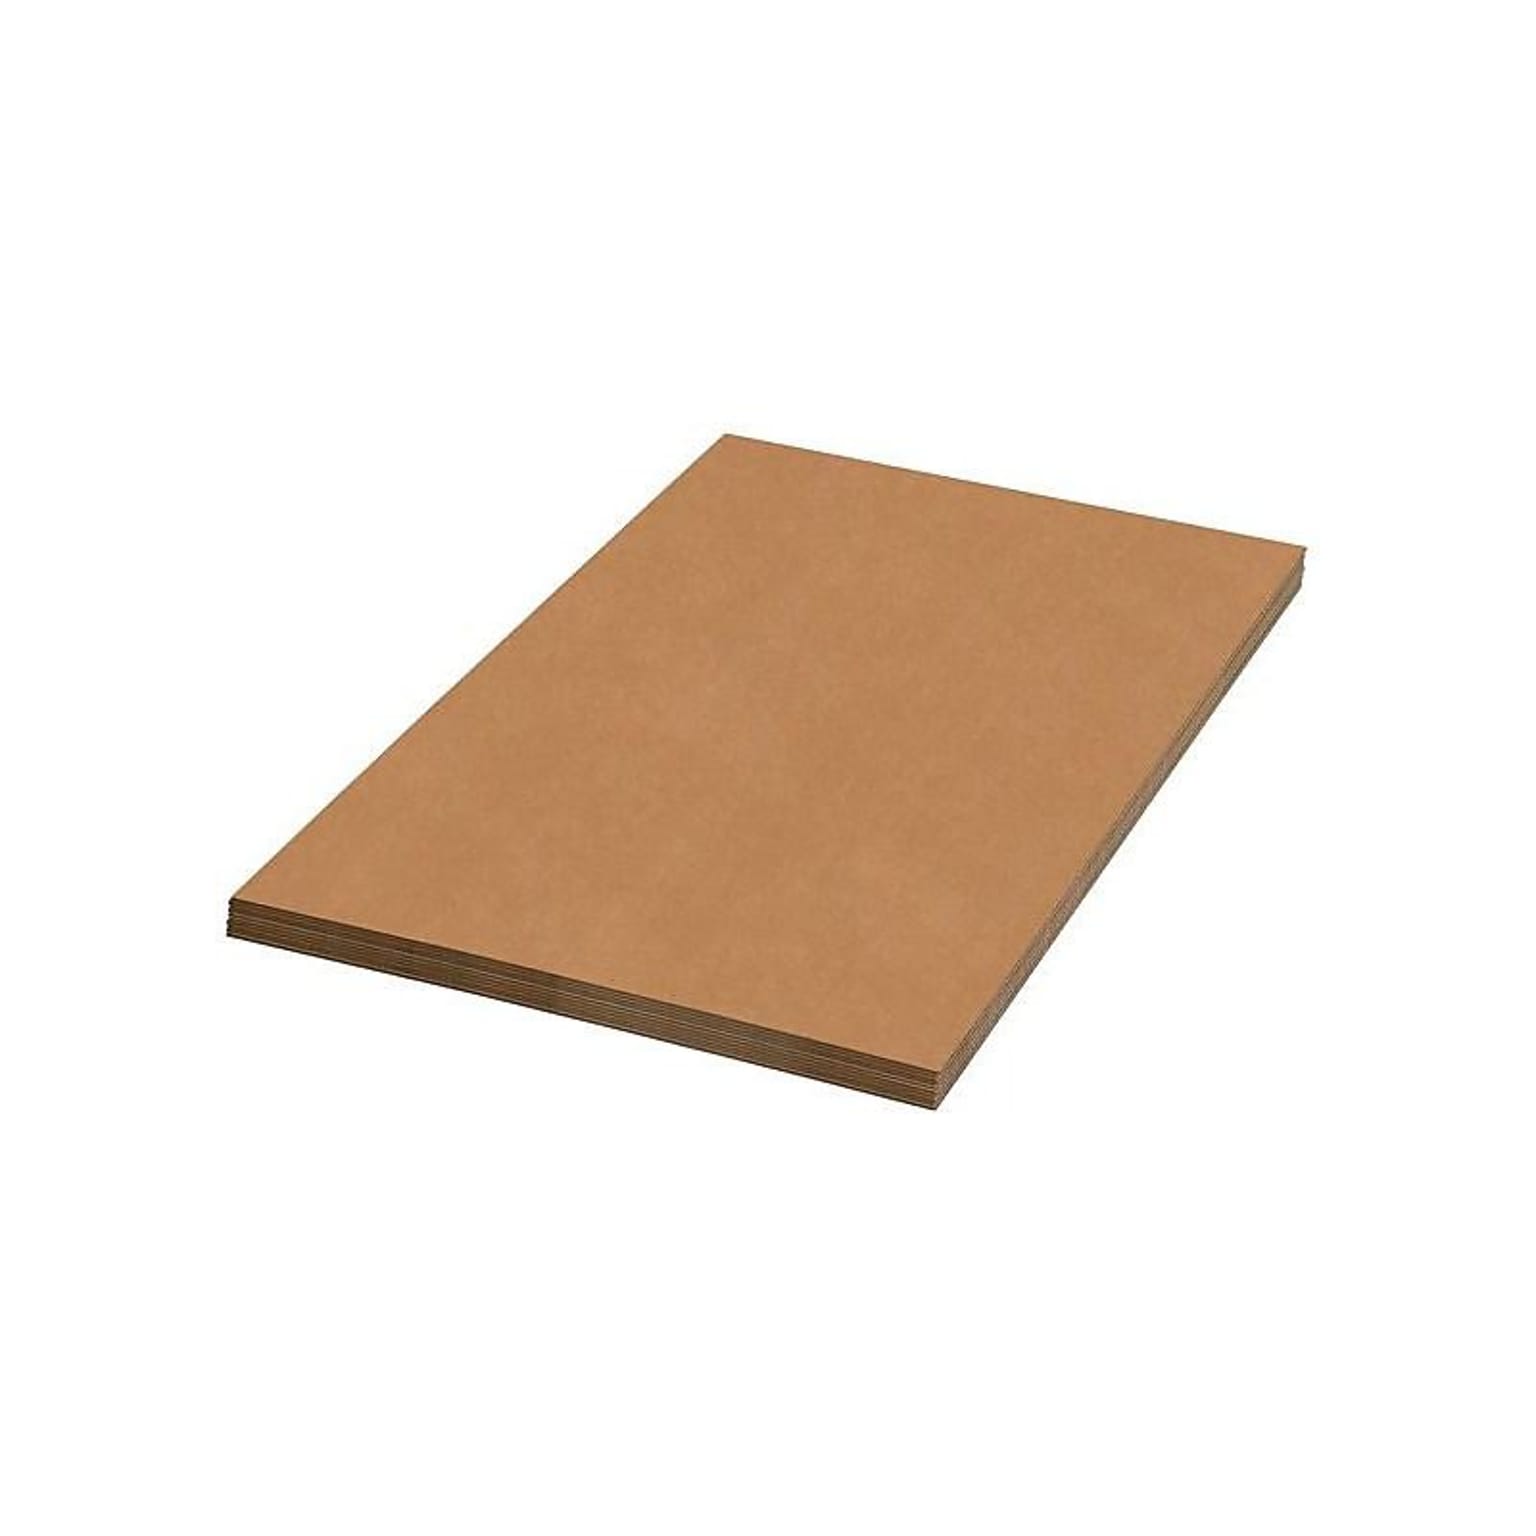 48 x 72 Corrugated Layer Pads, 5/Bundle (BSSP4872)